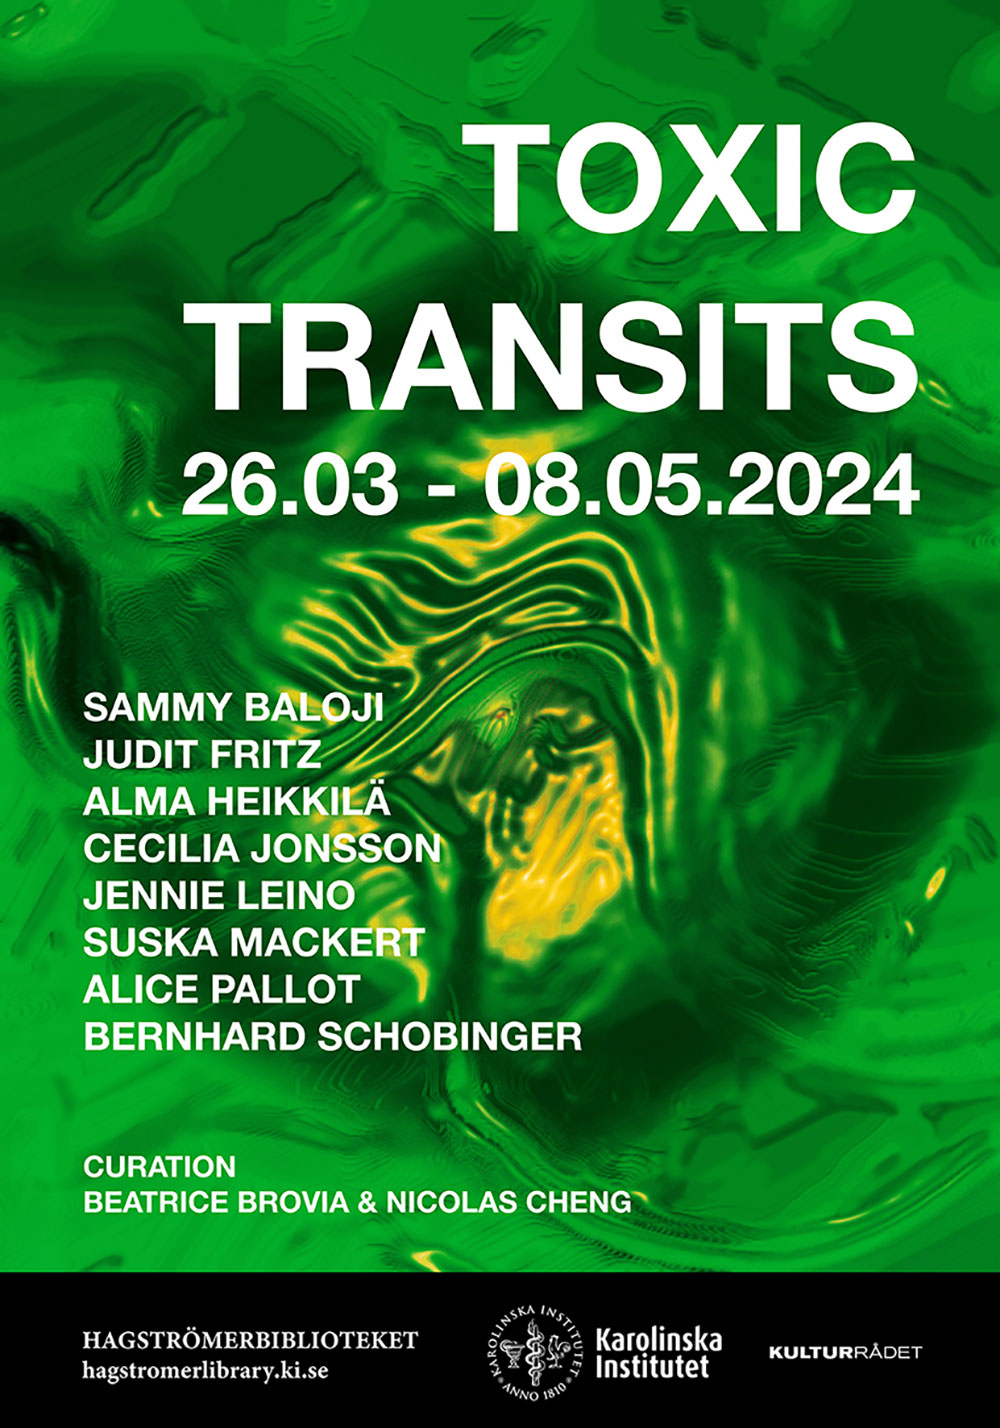 Toxic Transits exhibition